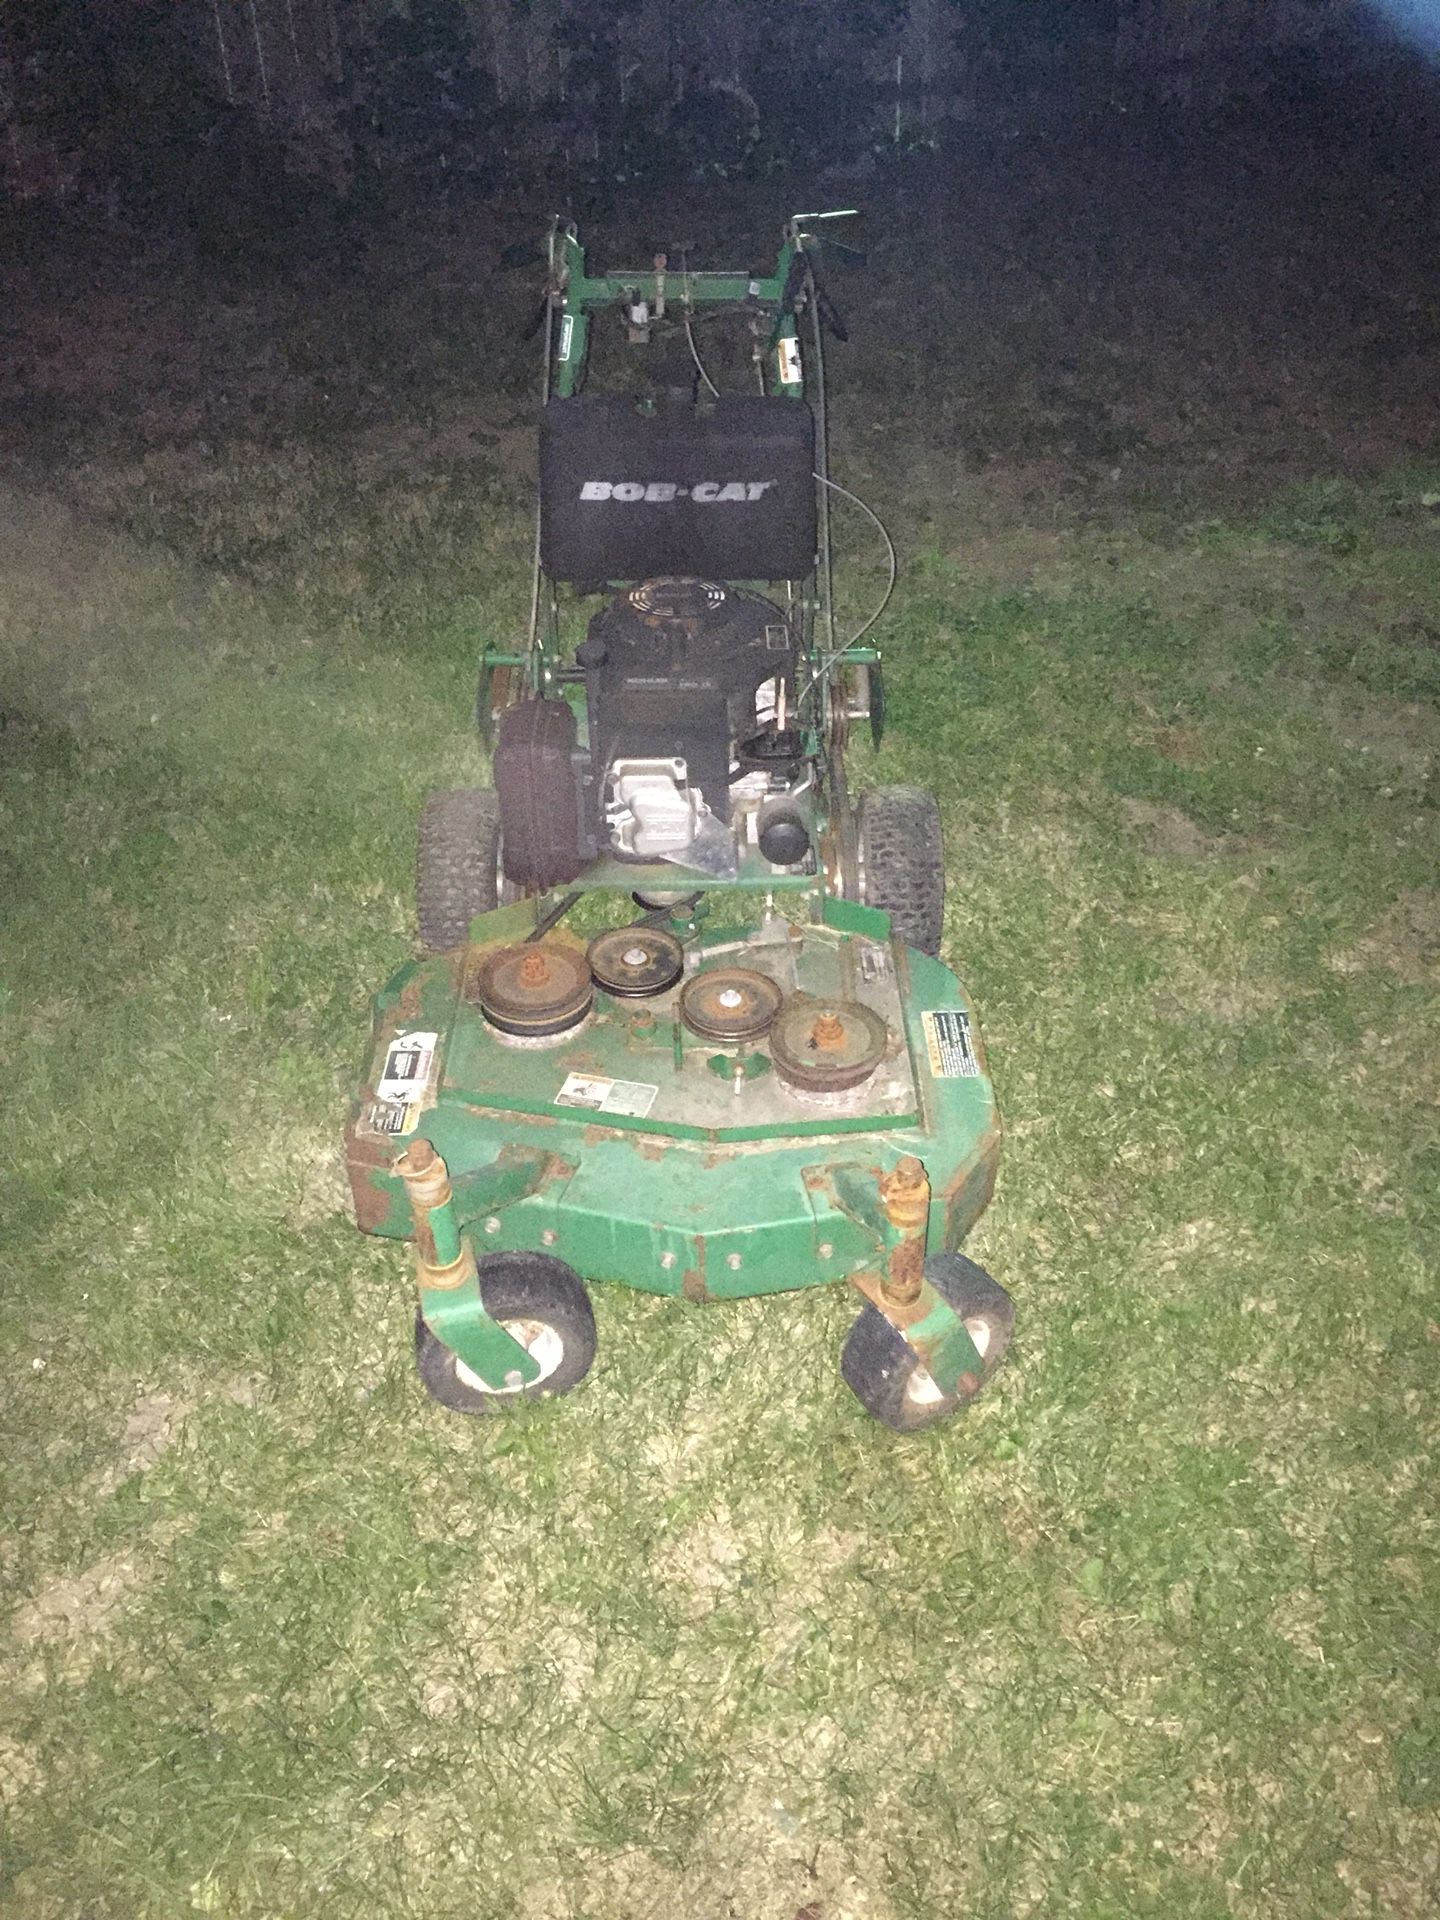 Bobcat commercial lawn mower